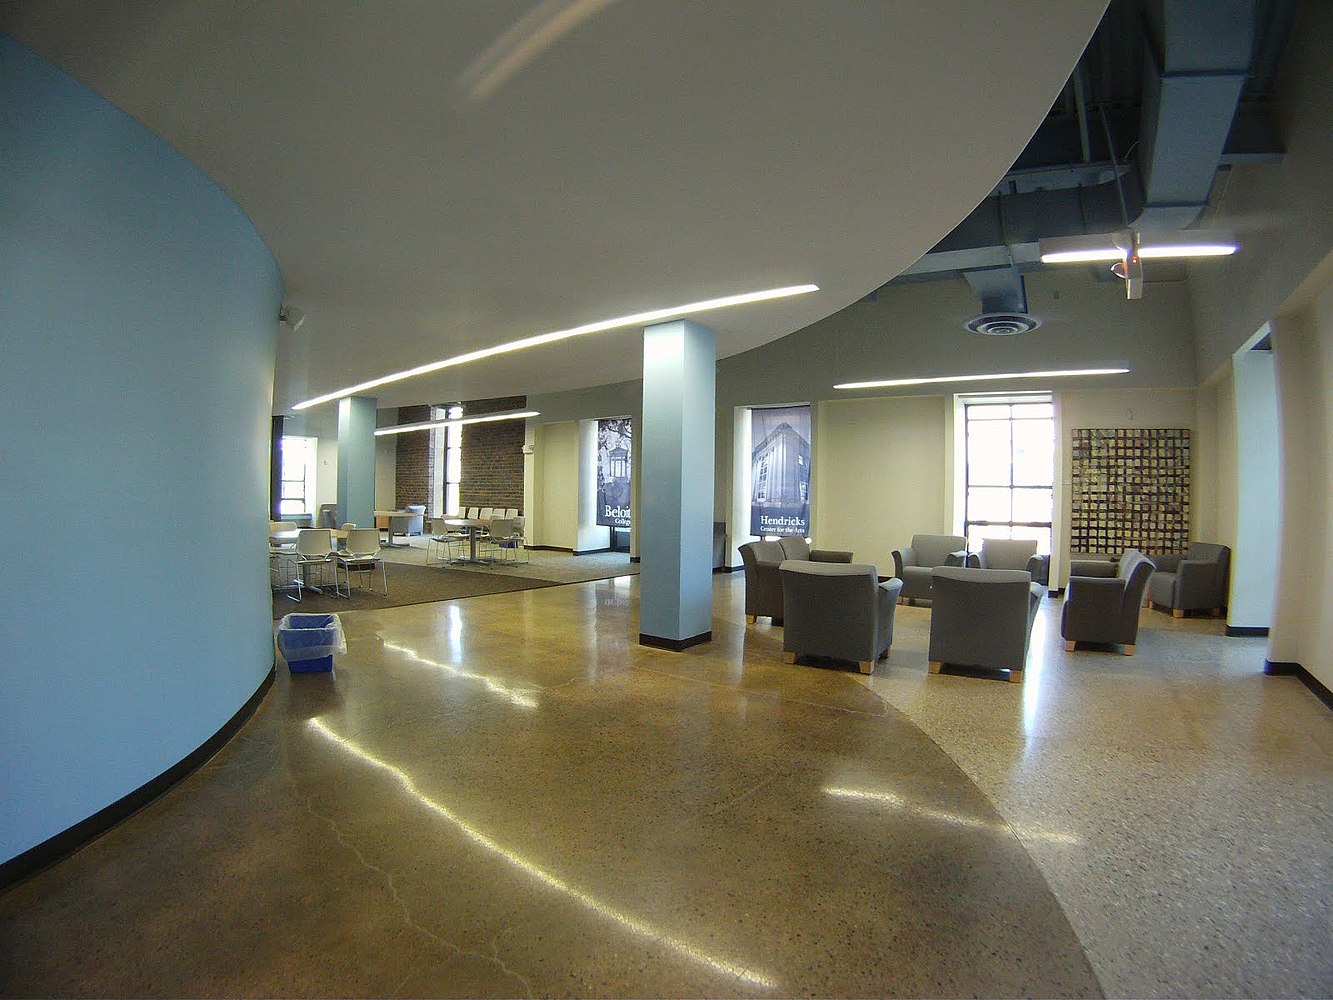 Photo of the lobby of Hendricks Center for the Arts